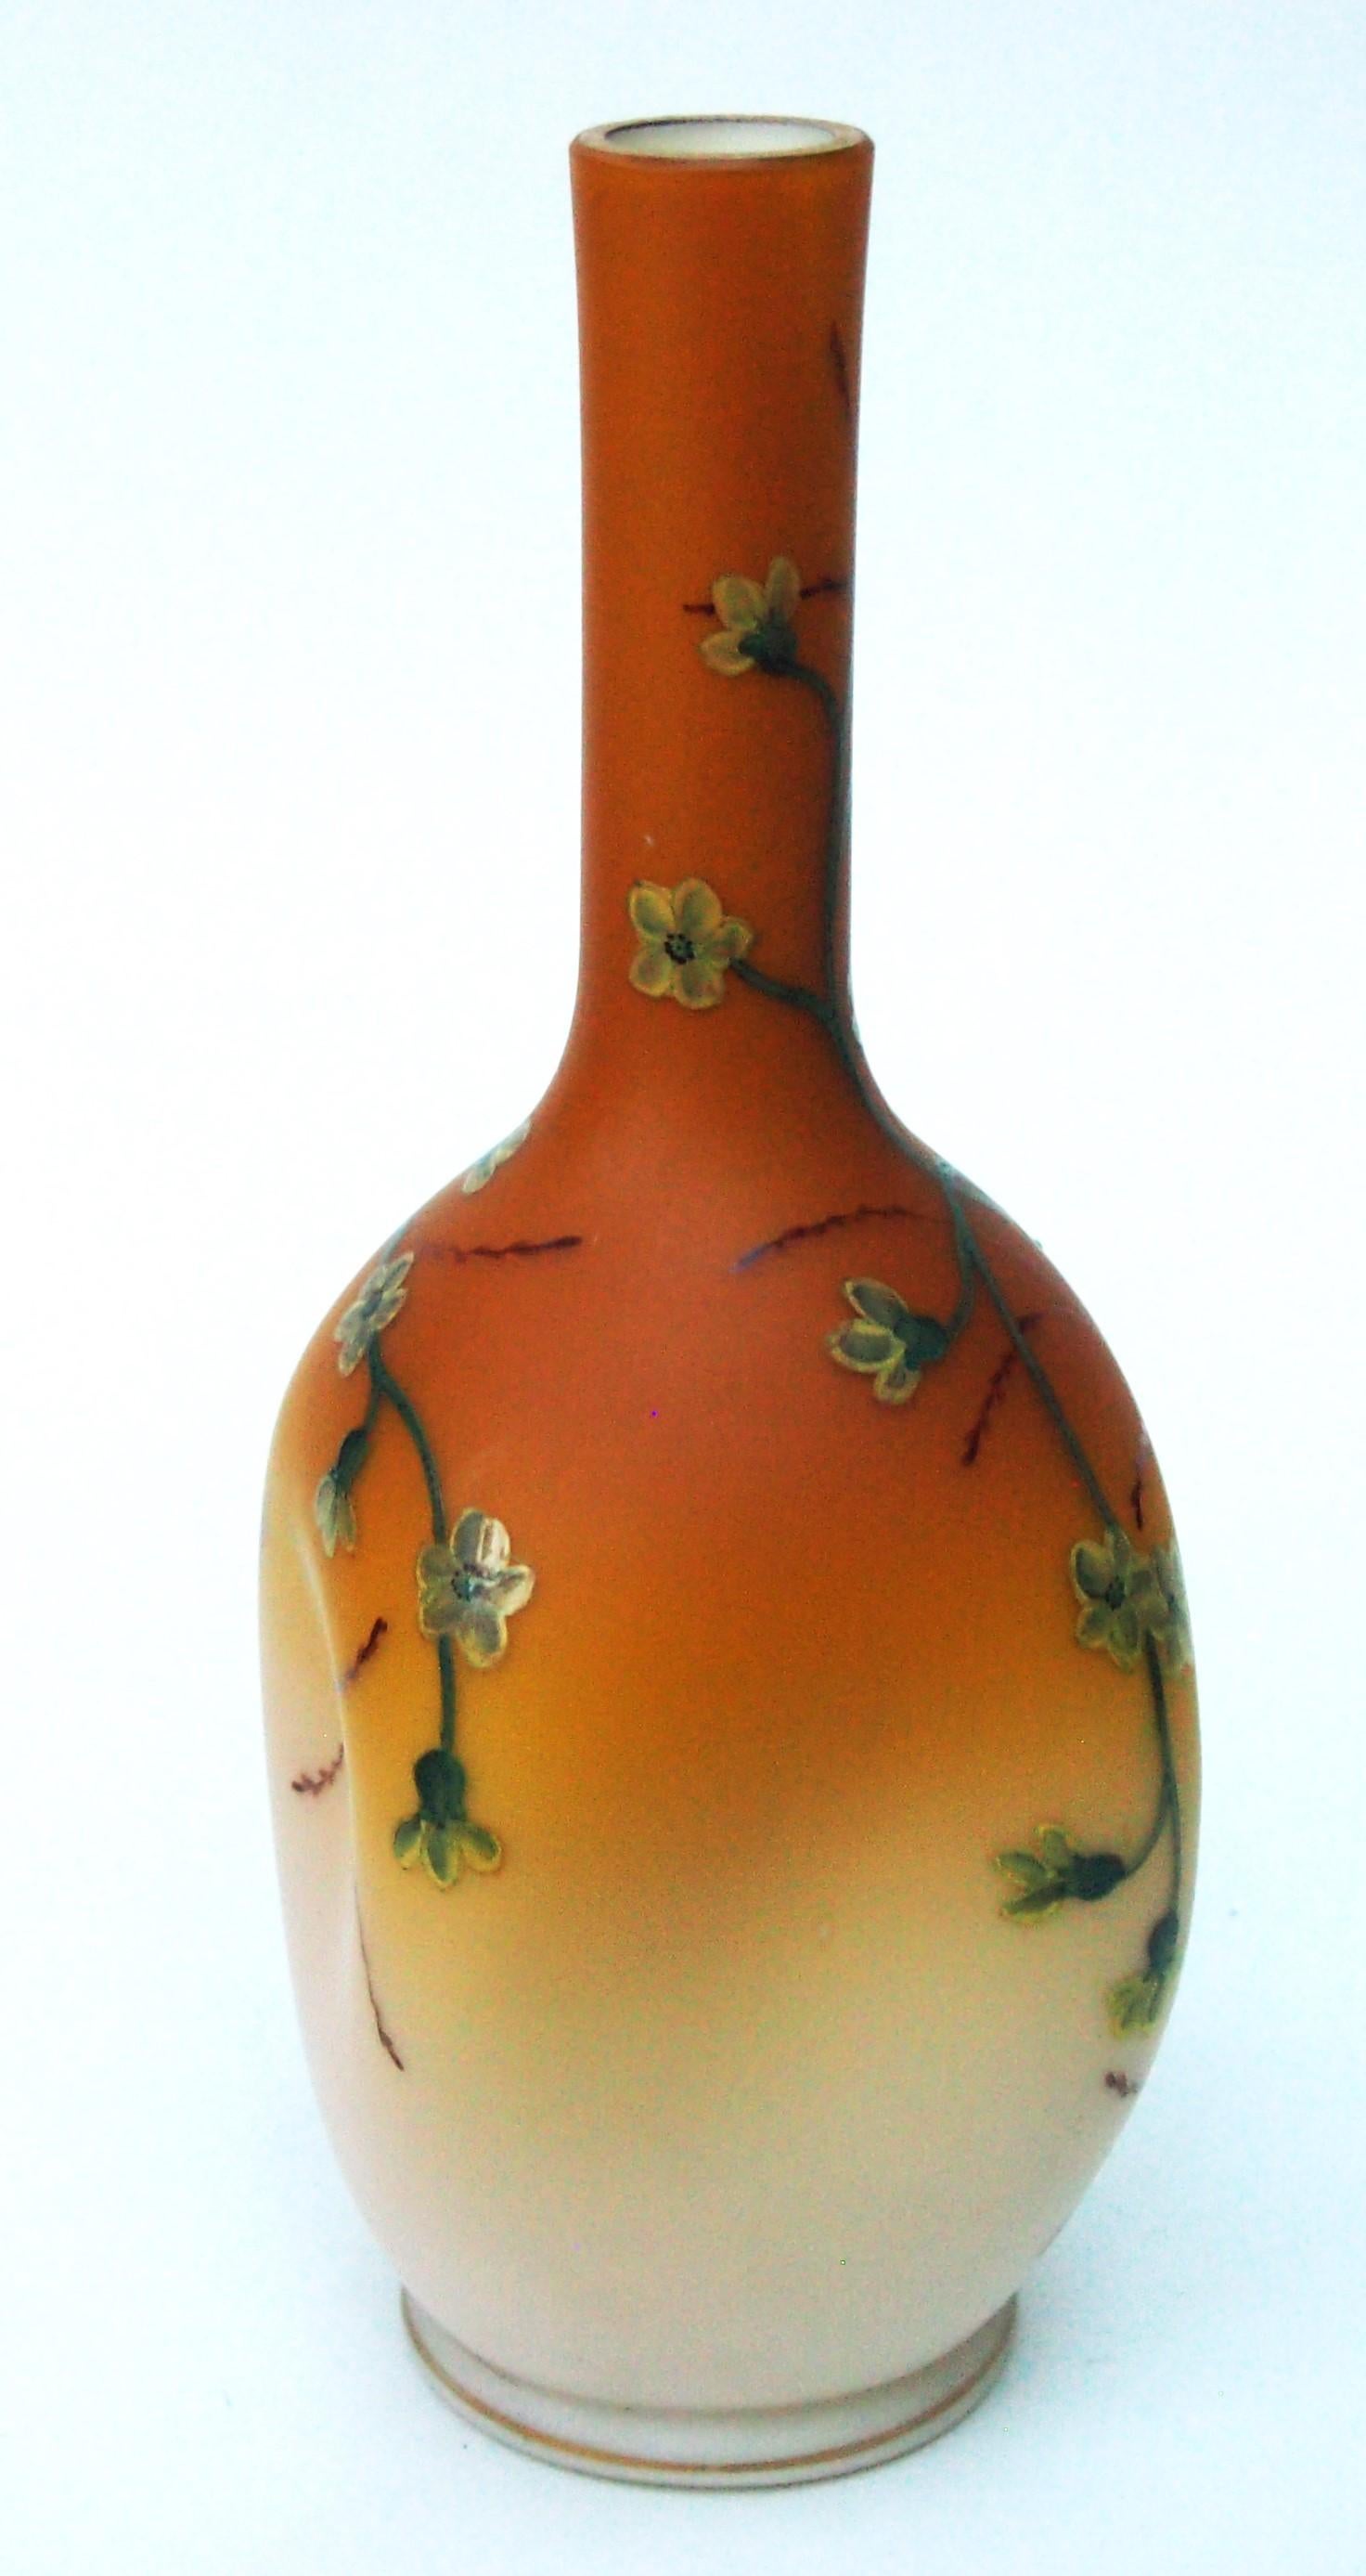 Aesthetic Movement Classic Early Loetz Glass Vase Enamelled Flowers on Spreading Peach  c1890